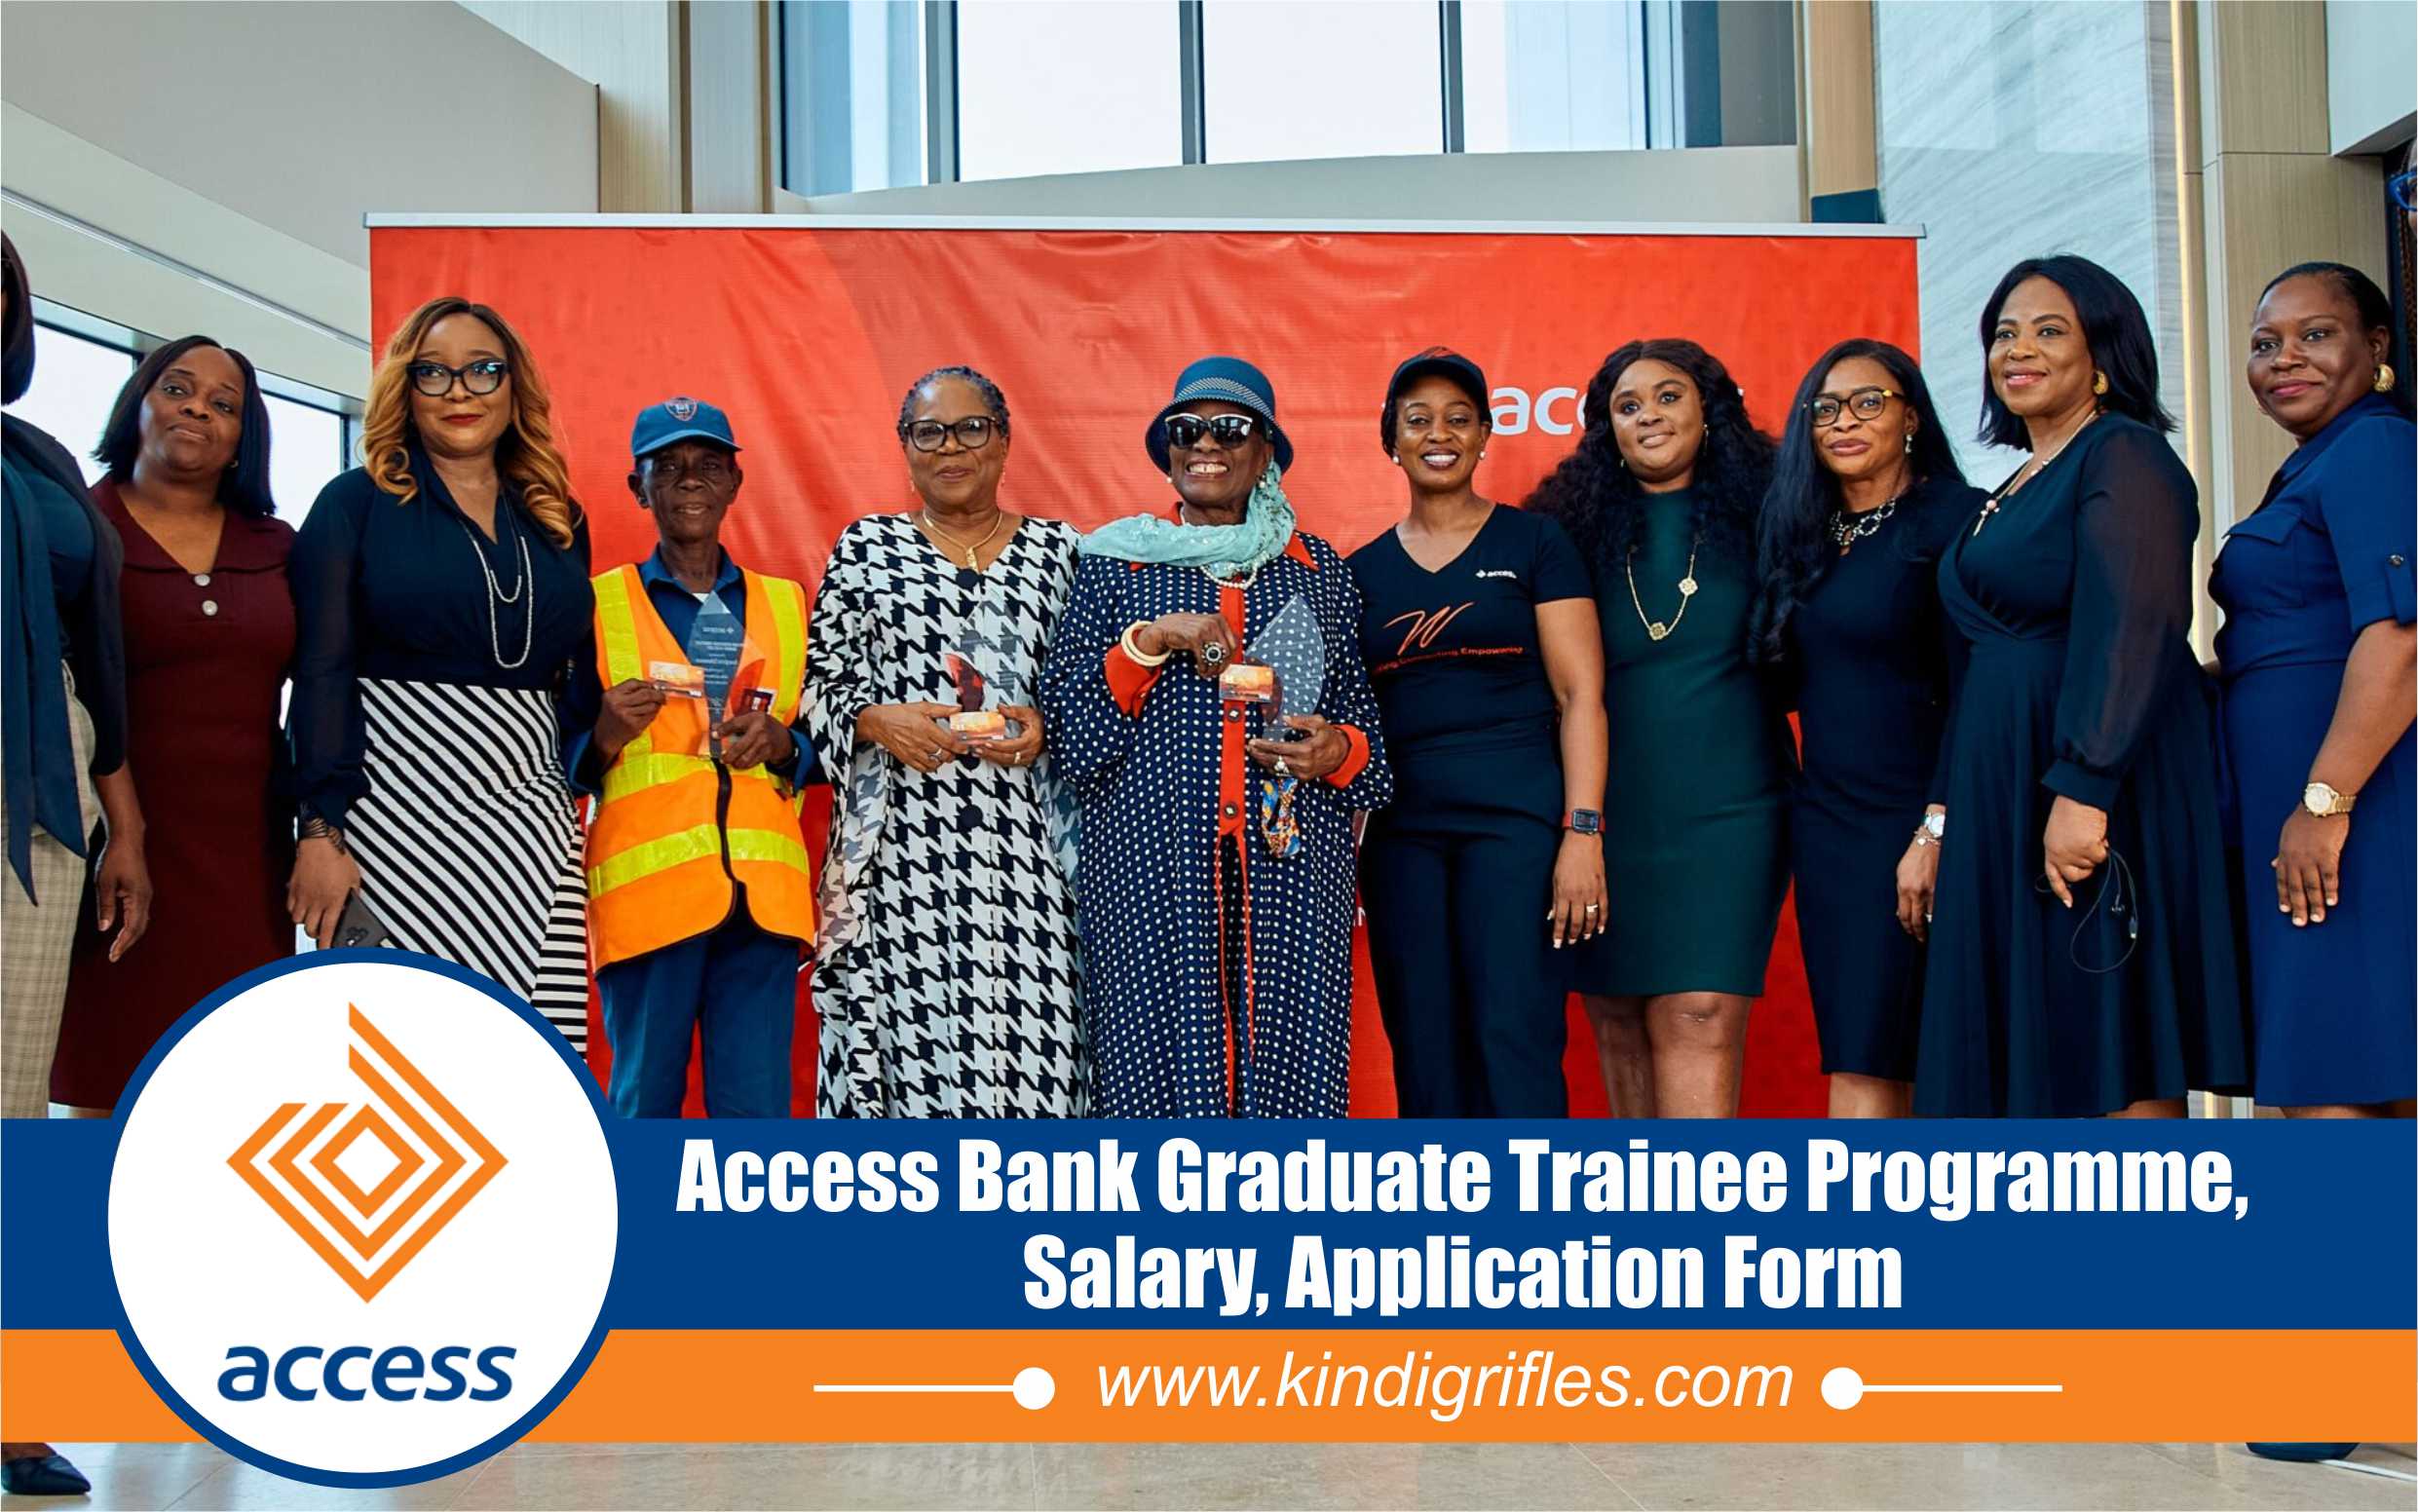 Access Bank Graduate Trainee Programme, Salary, Application Form